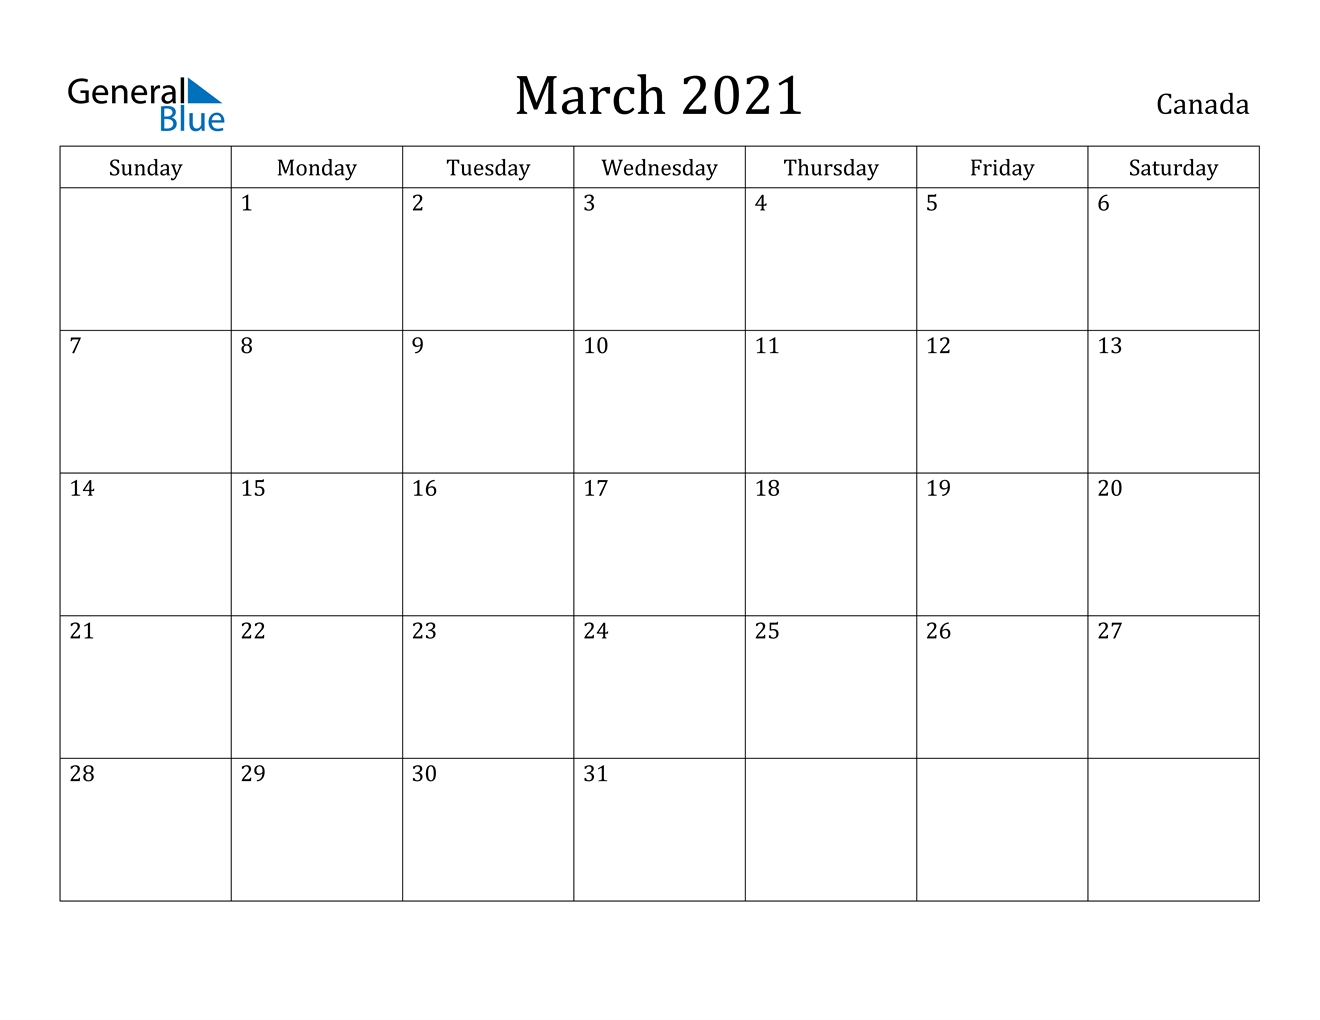 March 2021 Calendar Canada